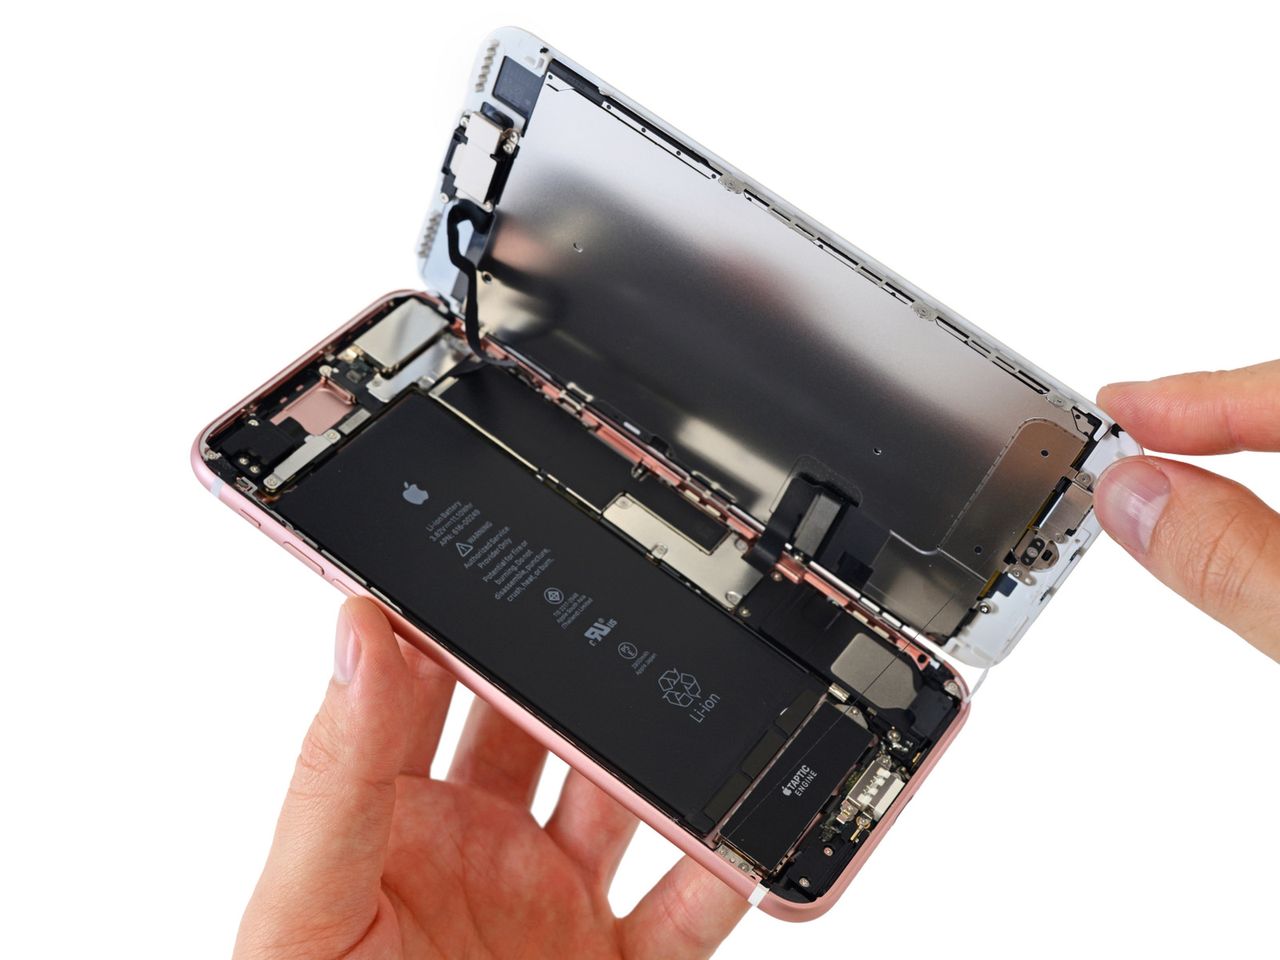 Ogromny akumulator Li-Ion flagowego iPhone'a: 2900 mAh i 3,82 V daje 11,1 Wh (źródło: ifixit.com)